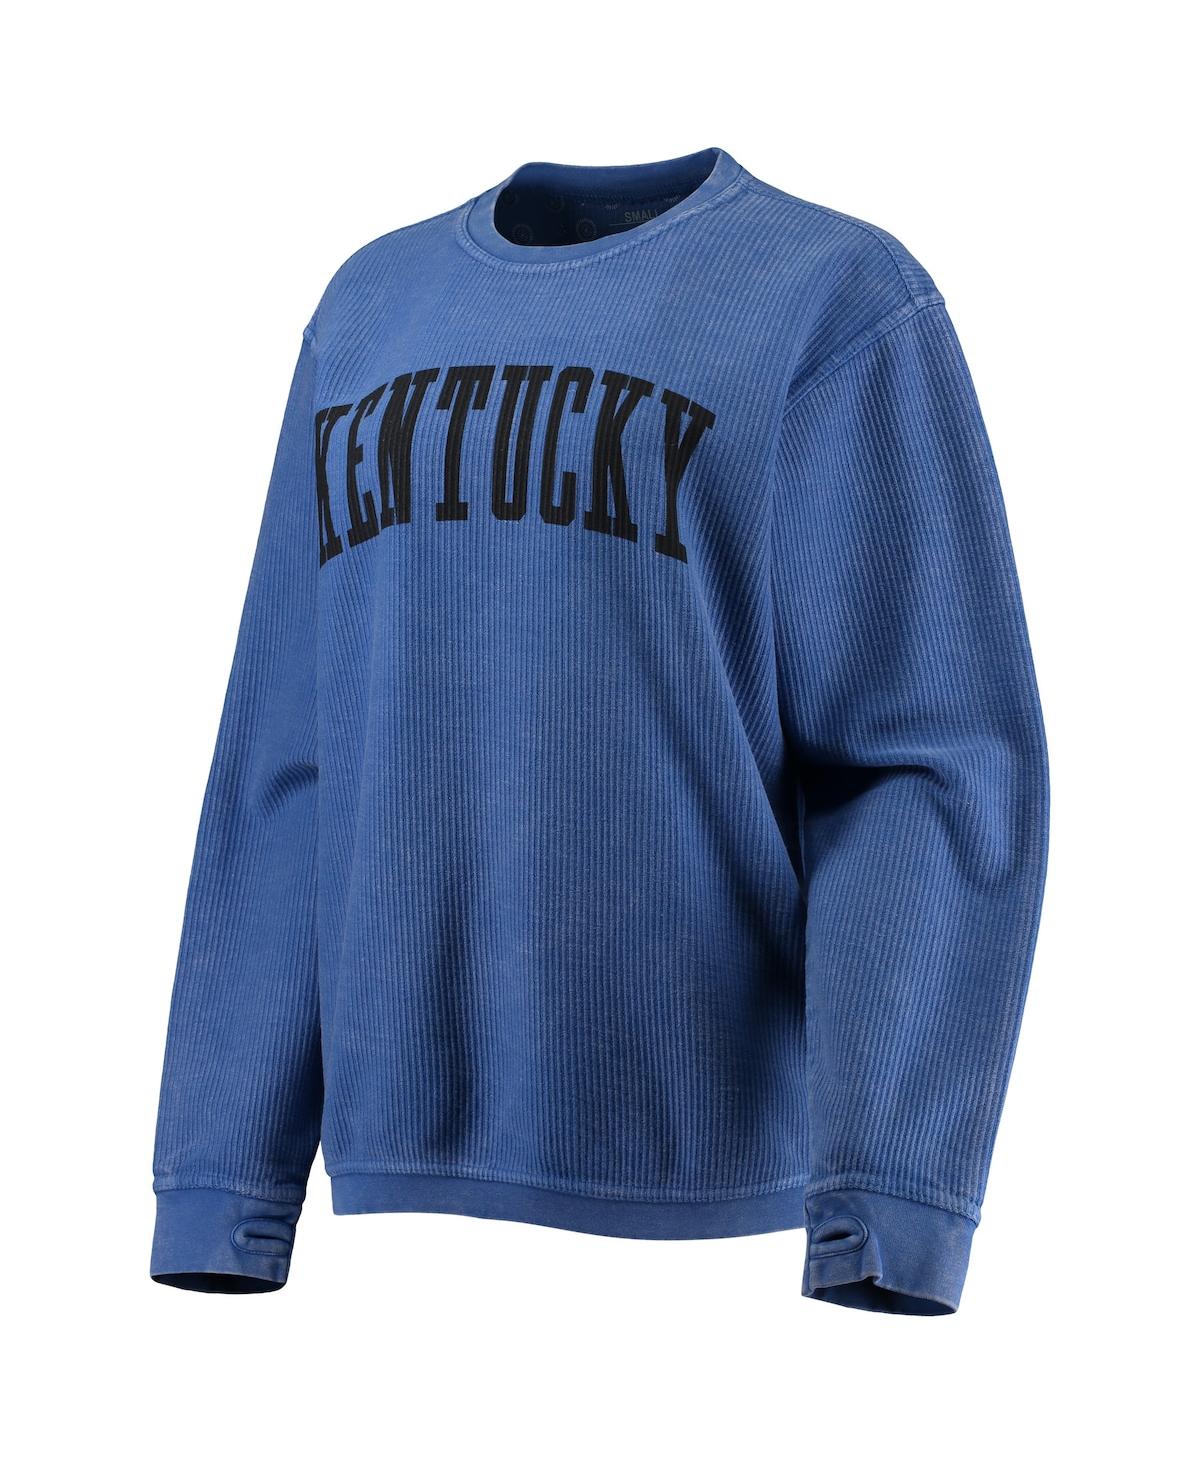 Shop Pressbox Women's  Royal Kentucky Wildcats Comfy Cord Vintage-like Wash Basic Arch Pullover Sweatshirt